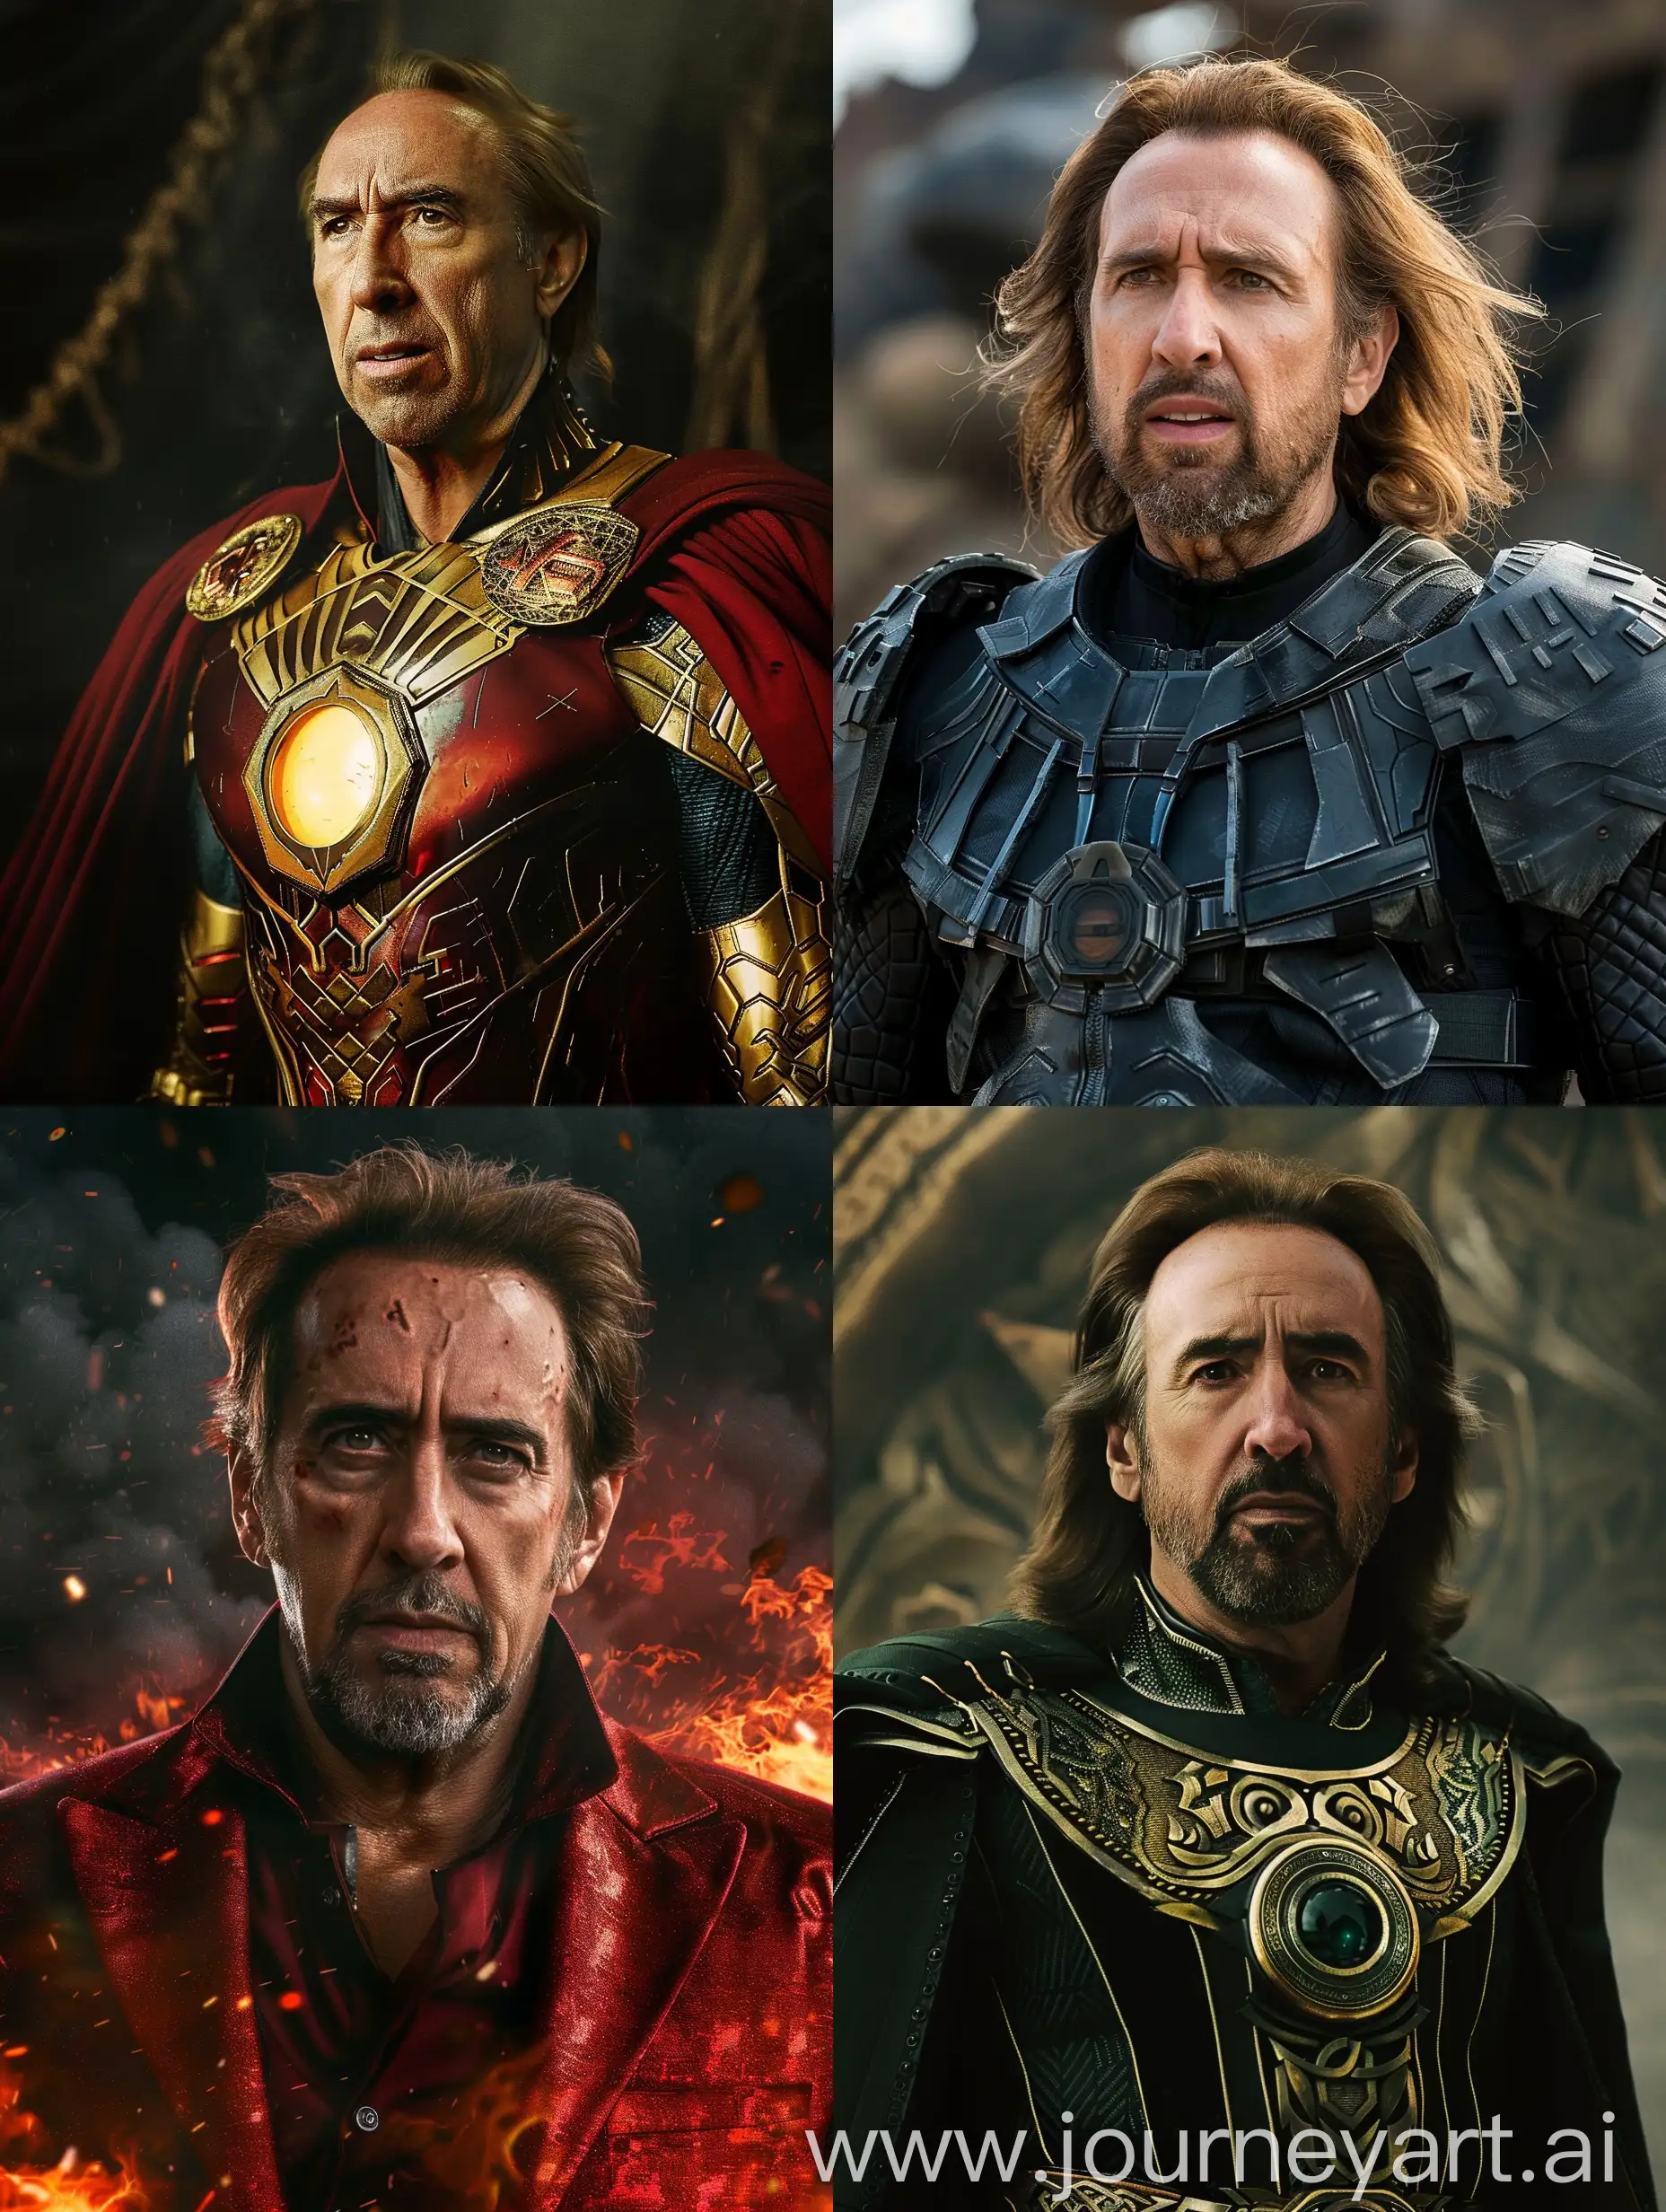 Nicolas Cage as a villain in a Marvel movie